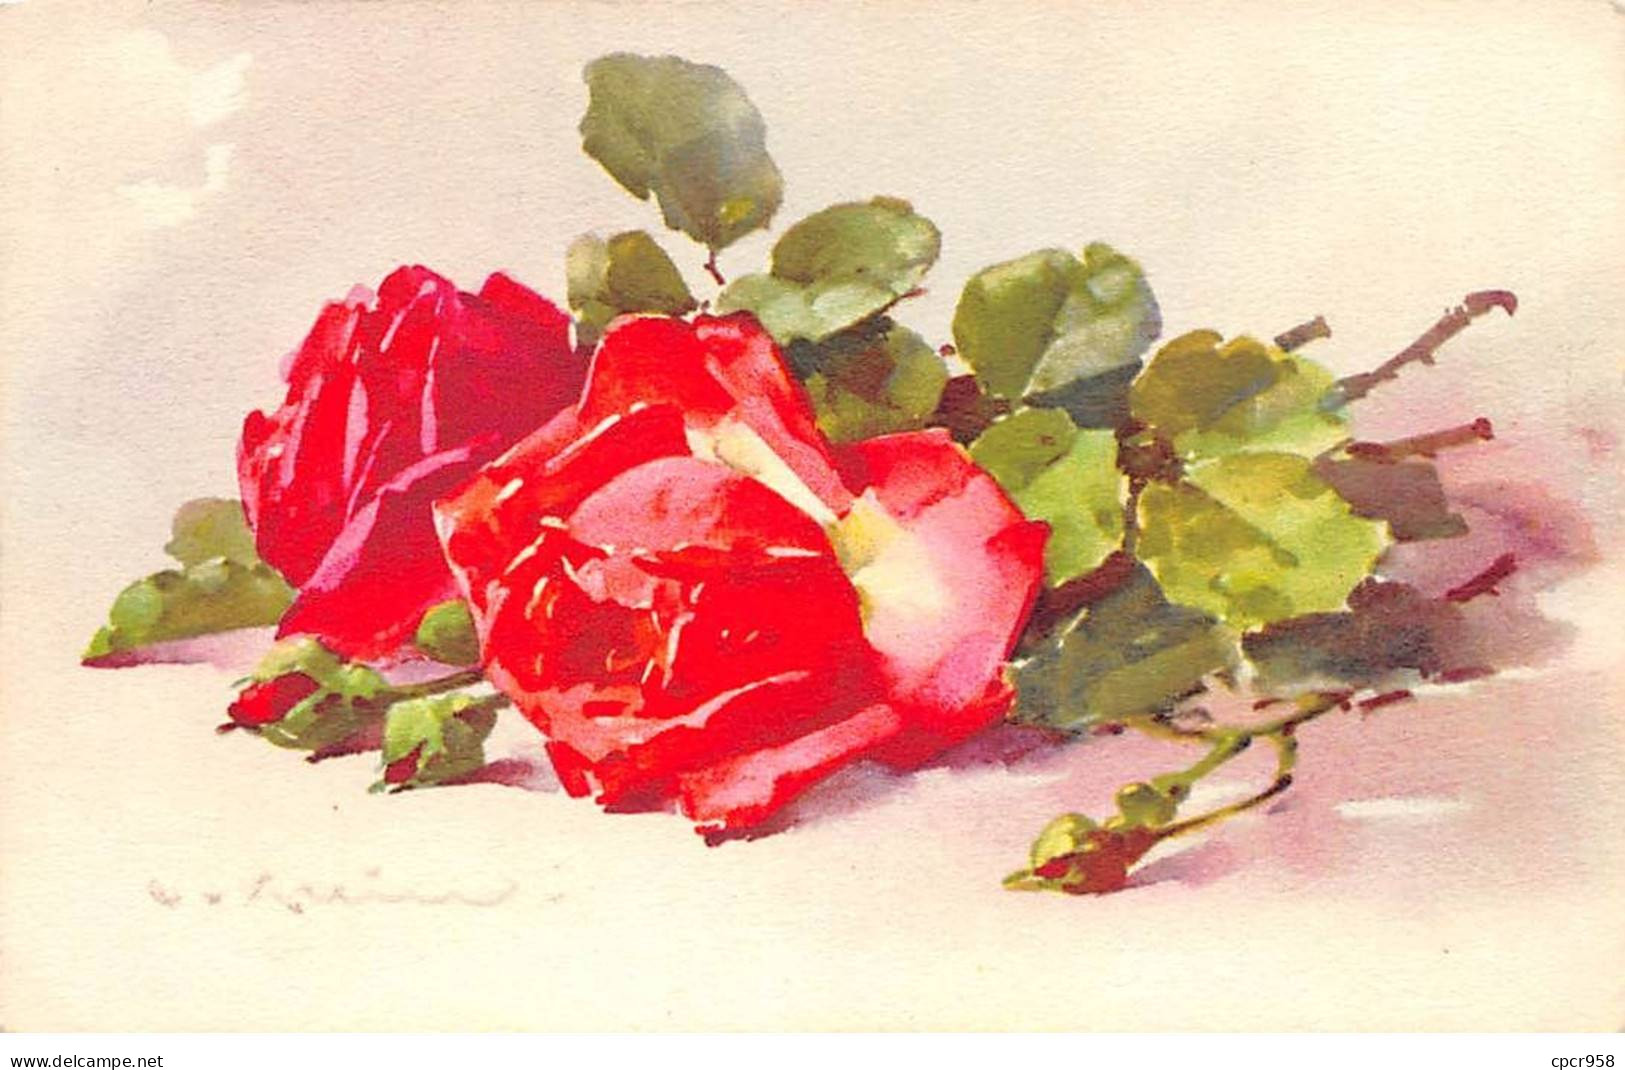 Illustrateurs - N°83836 - C. Klein - Roses - Klein, Catharina